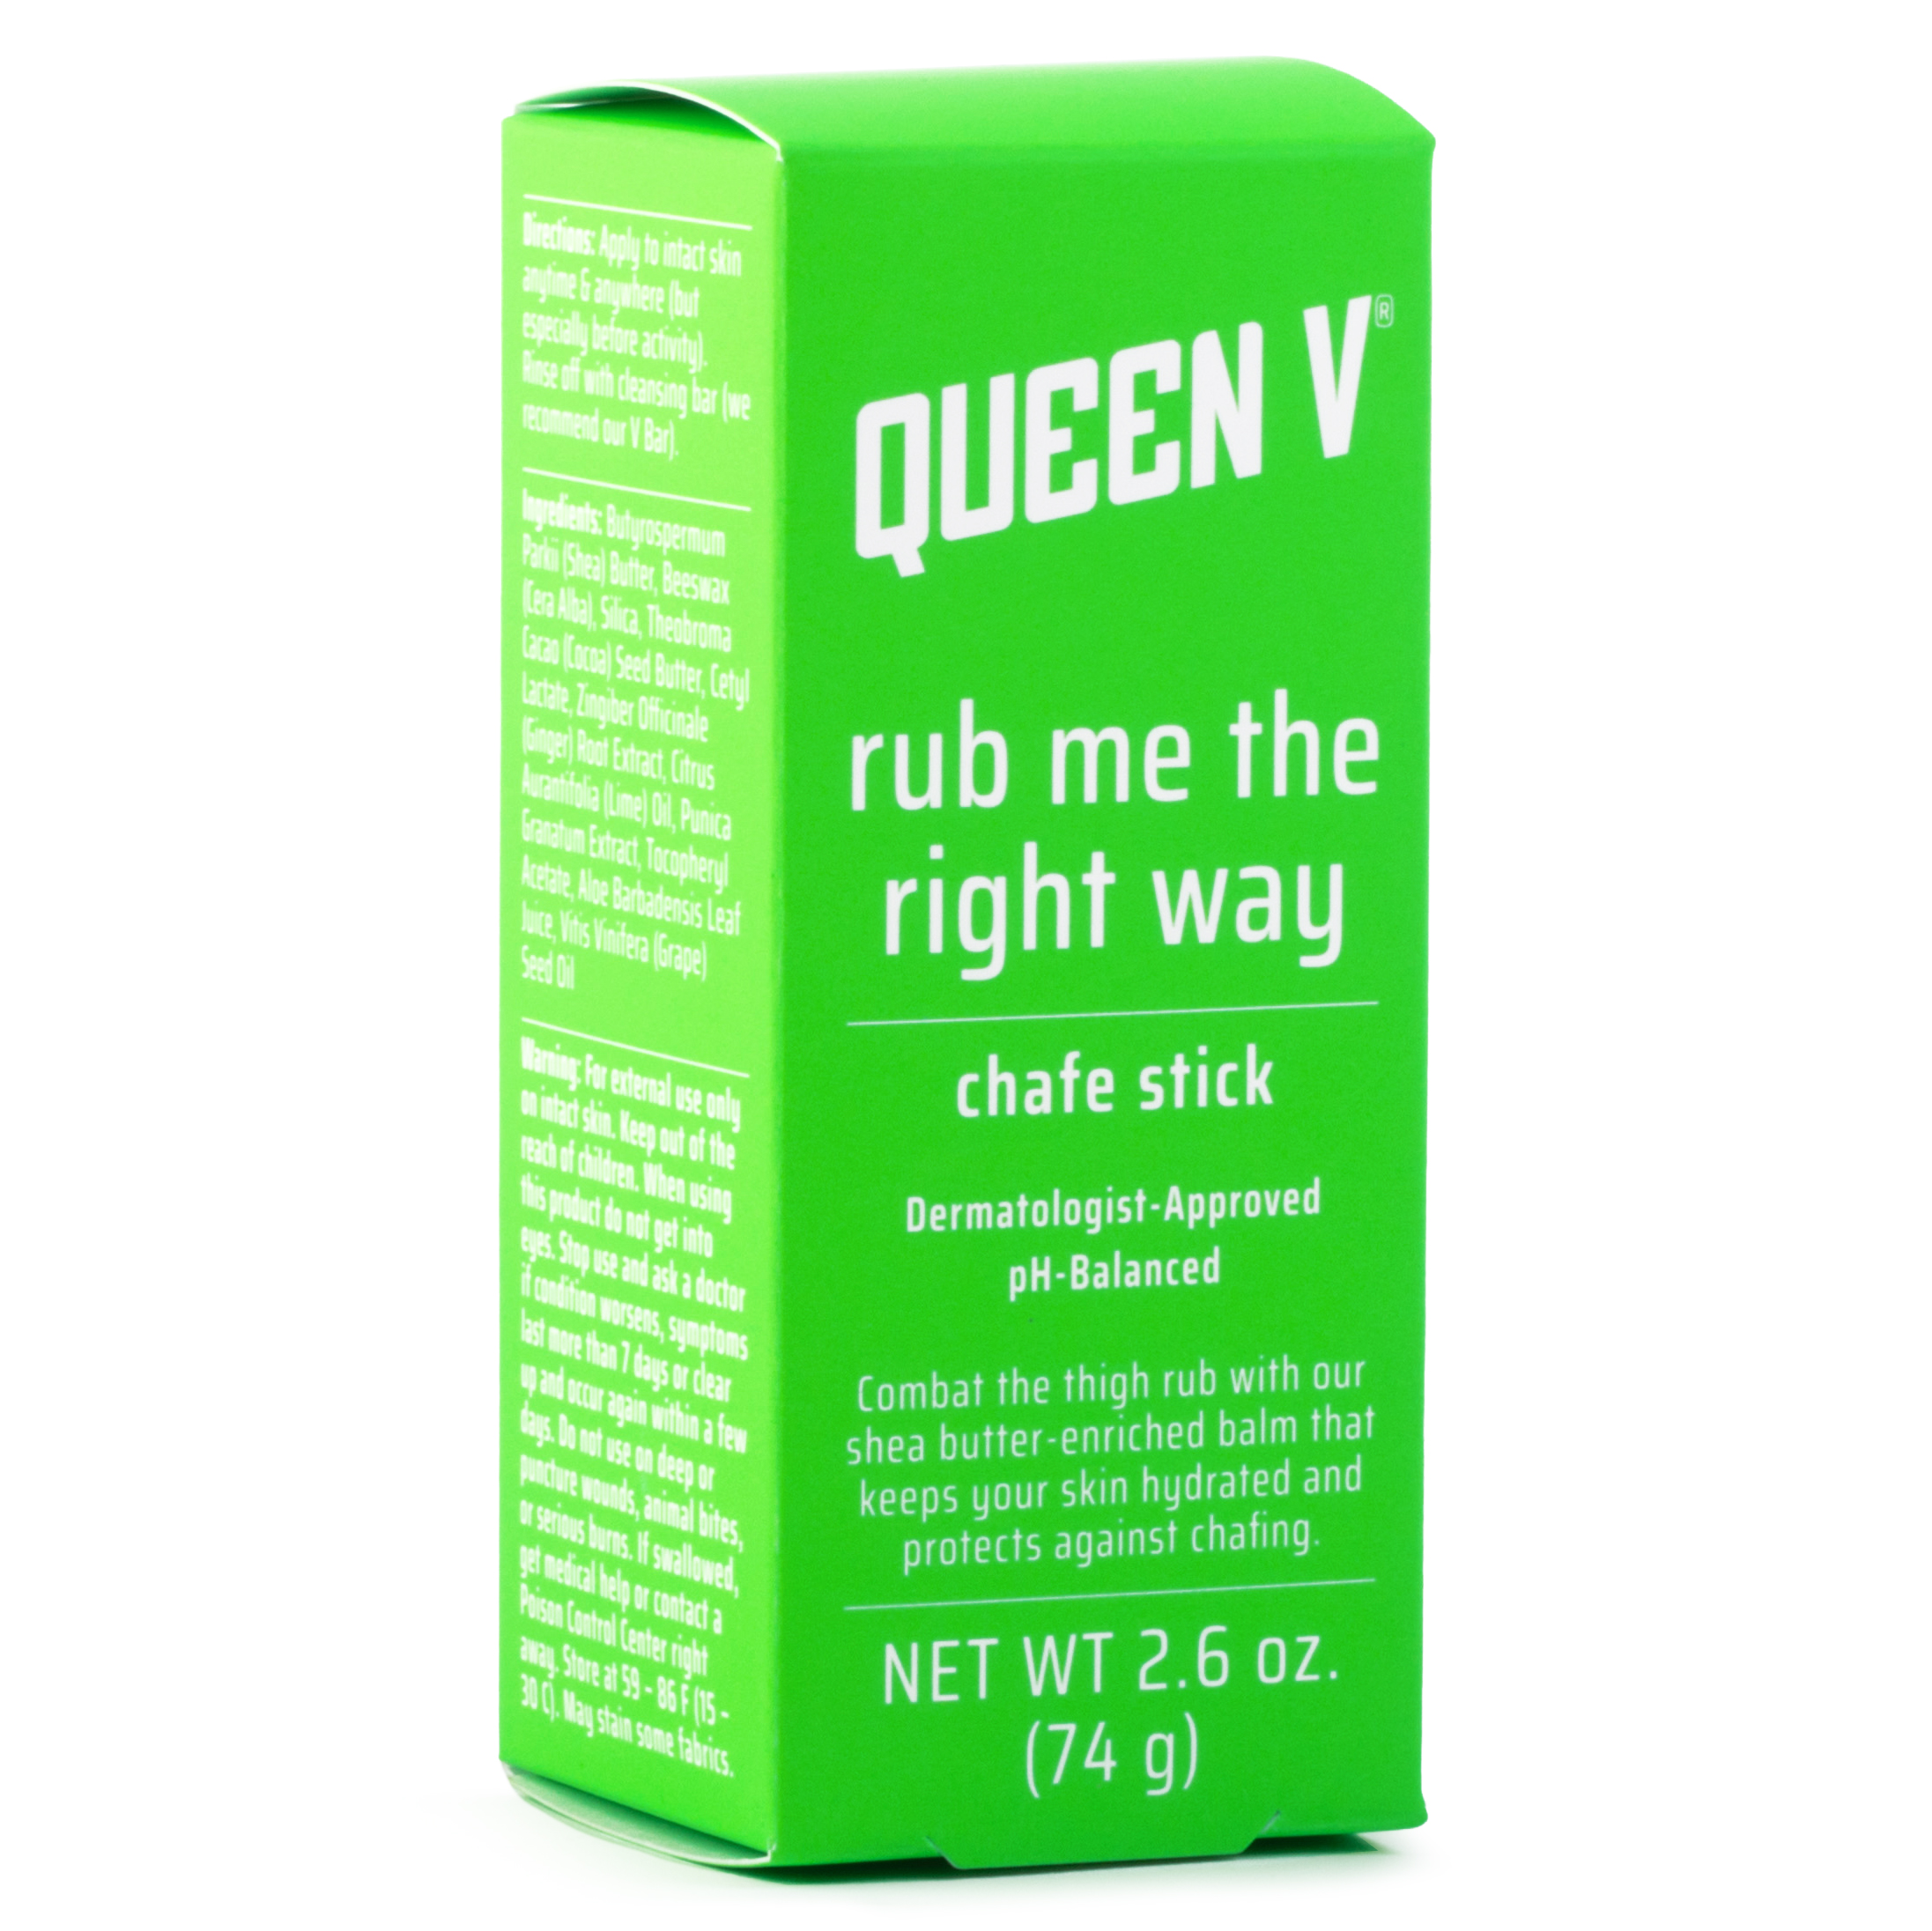 Queen V Rub Me the Right Way Anti-Chafe Stick pH-Balanced 2.6 Oz - image 2 of 3